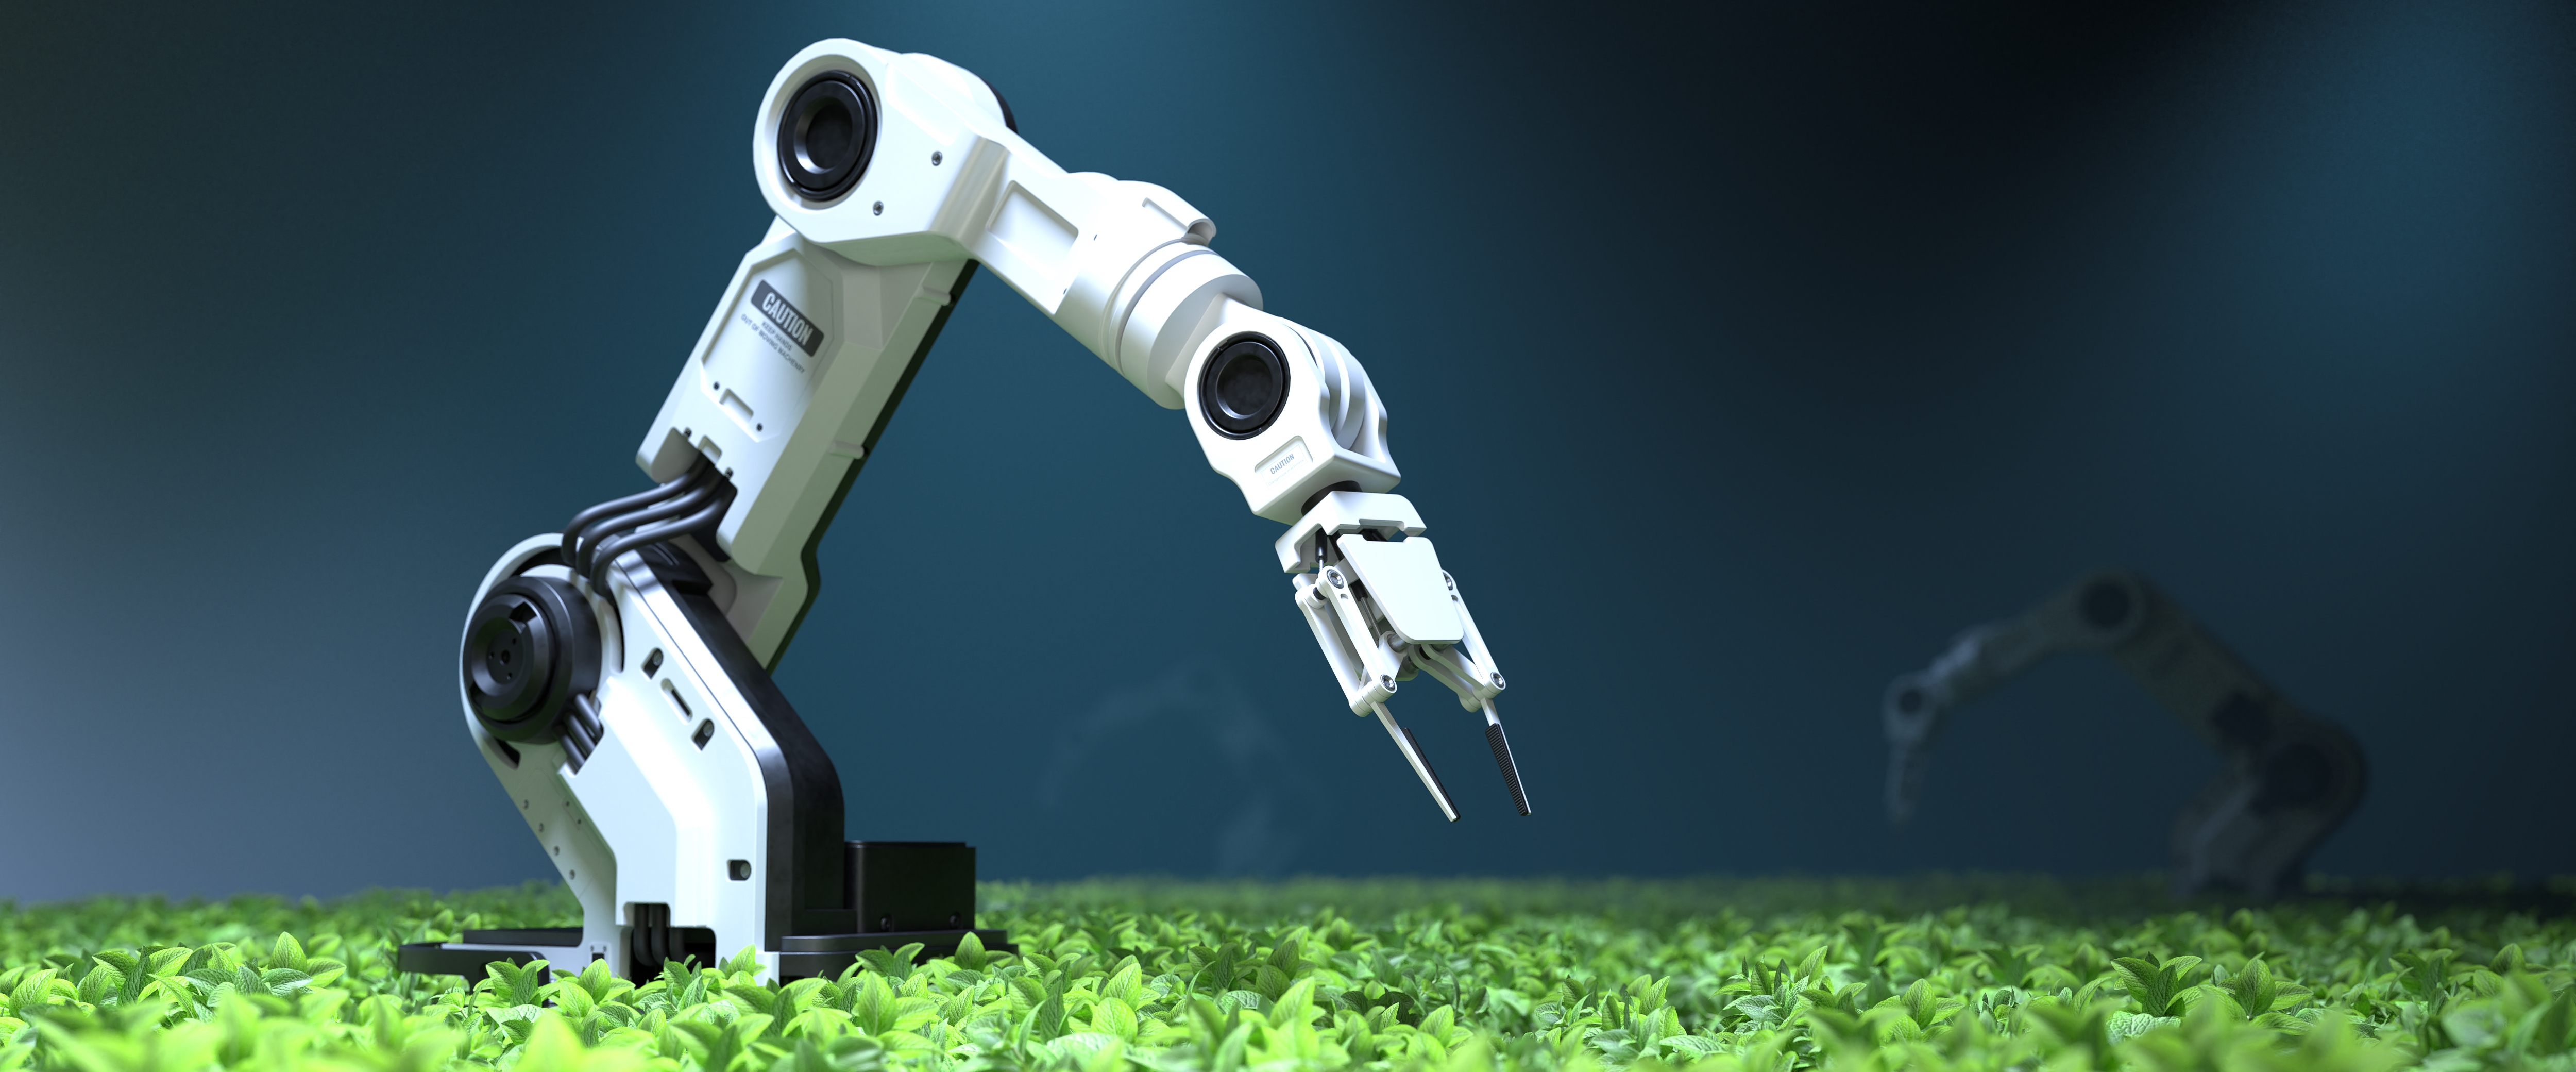 small arm robot on grass